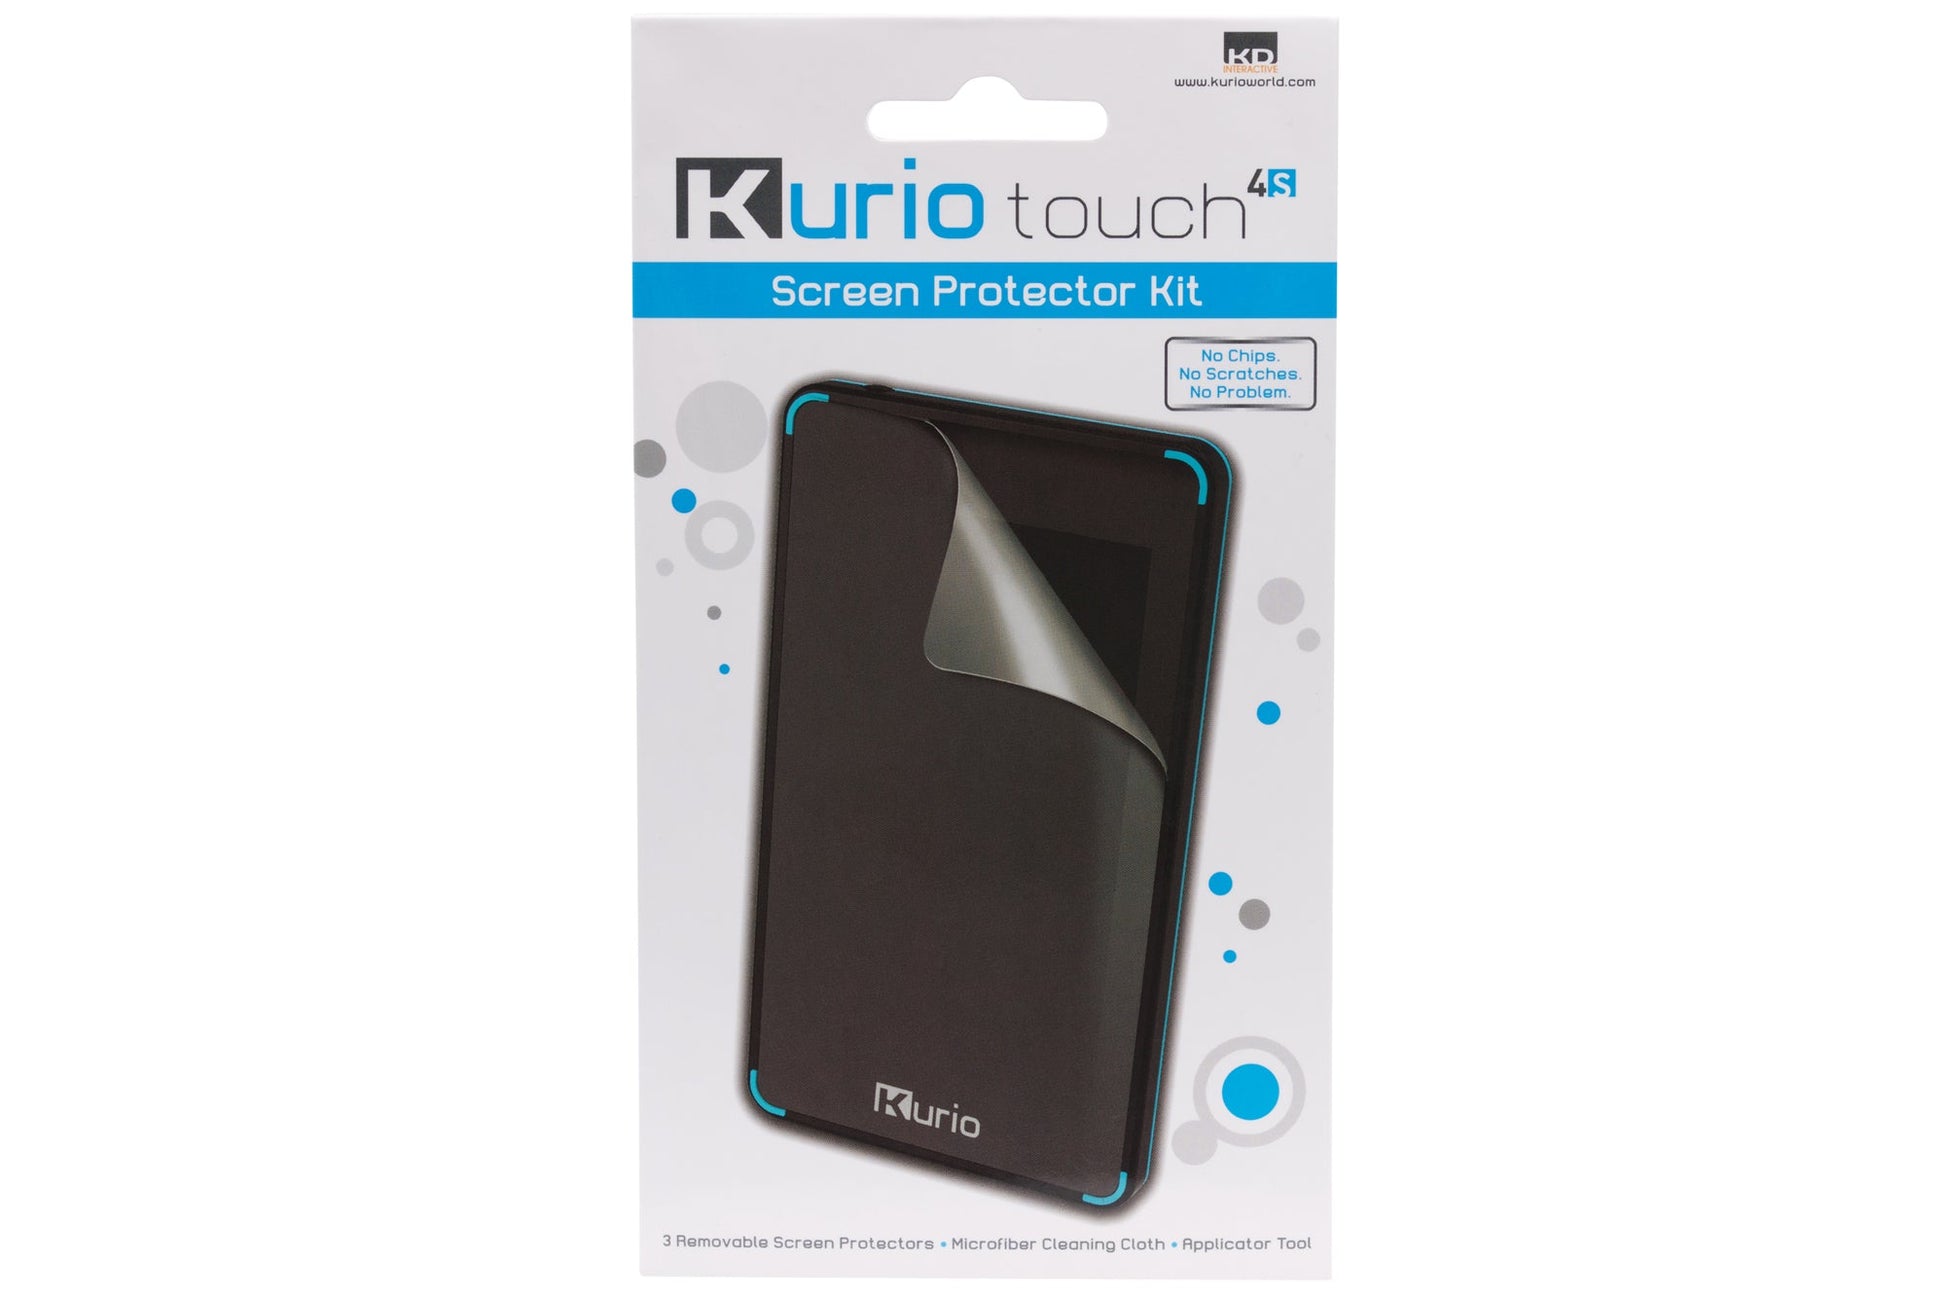 Kurio Screen Protector Kit for Kurio 4S and Kurio 4" Pocket Tablet - maplin.co.uk